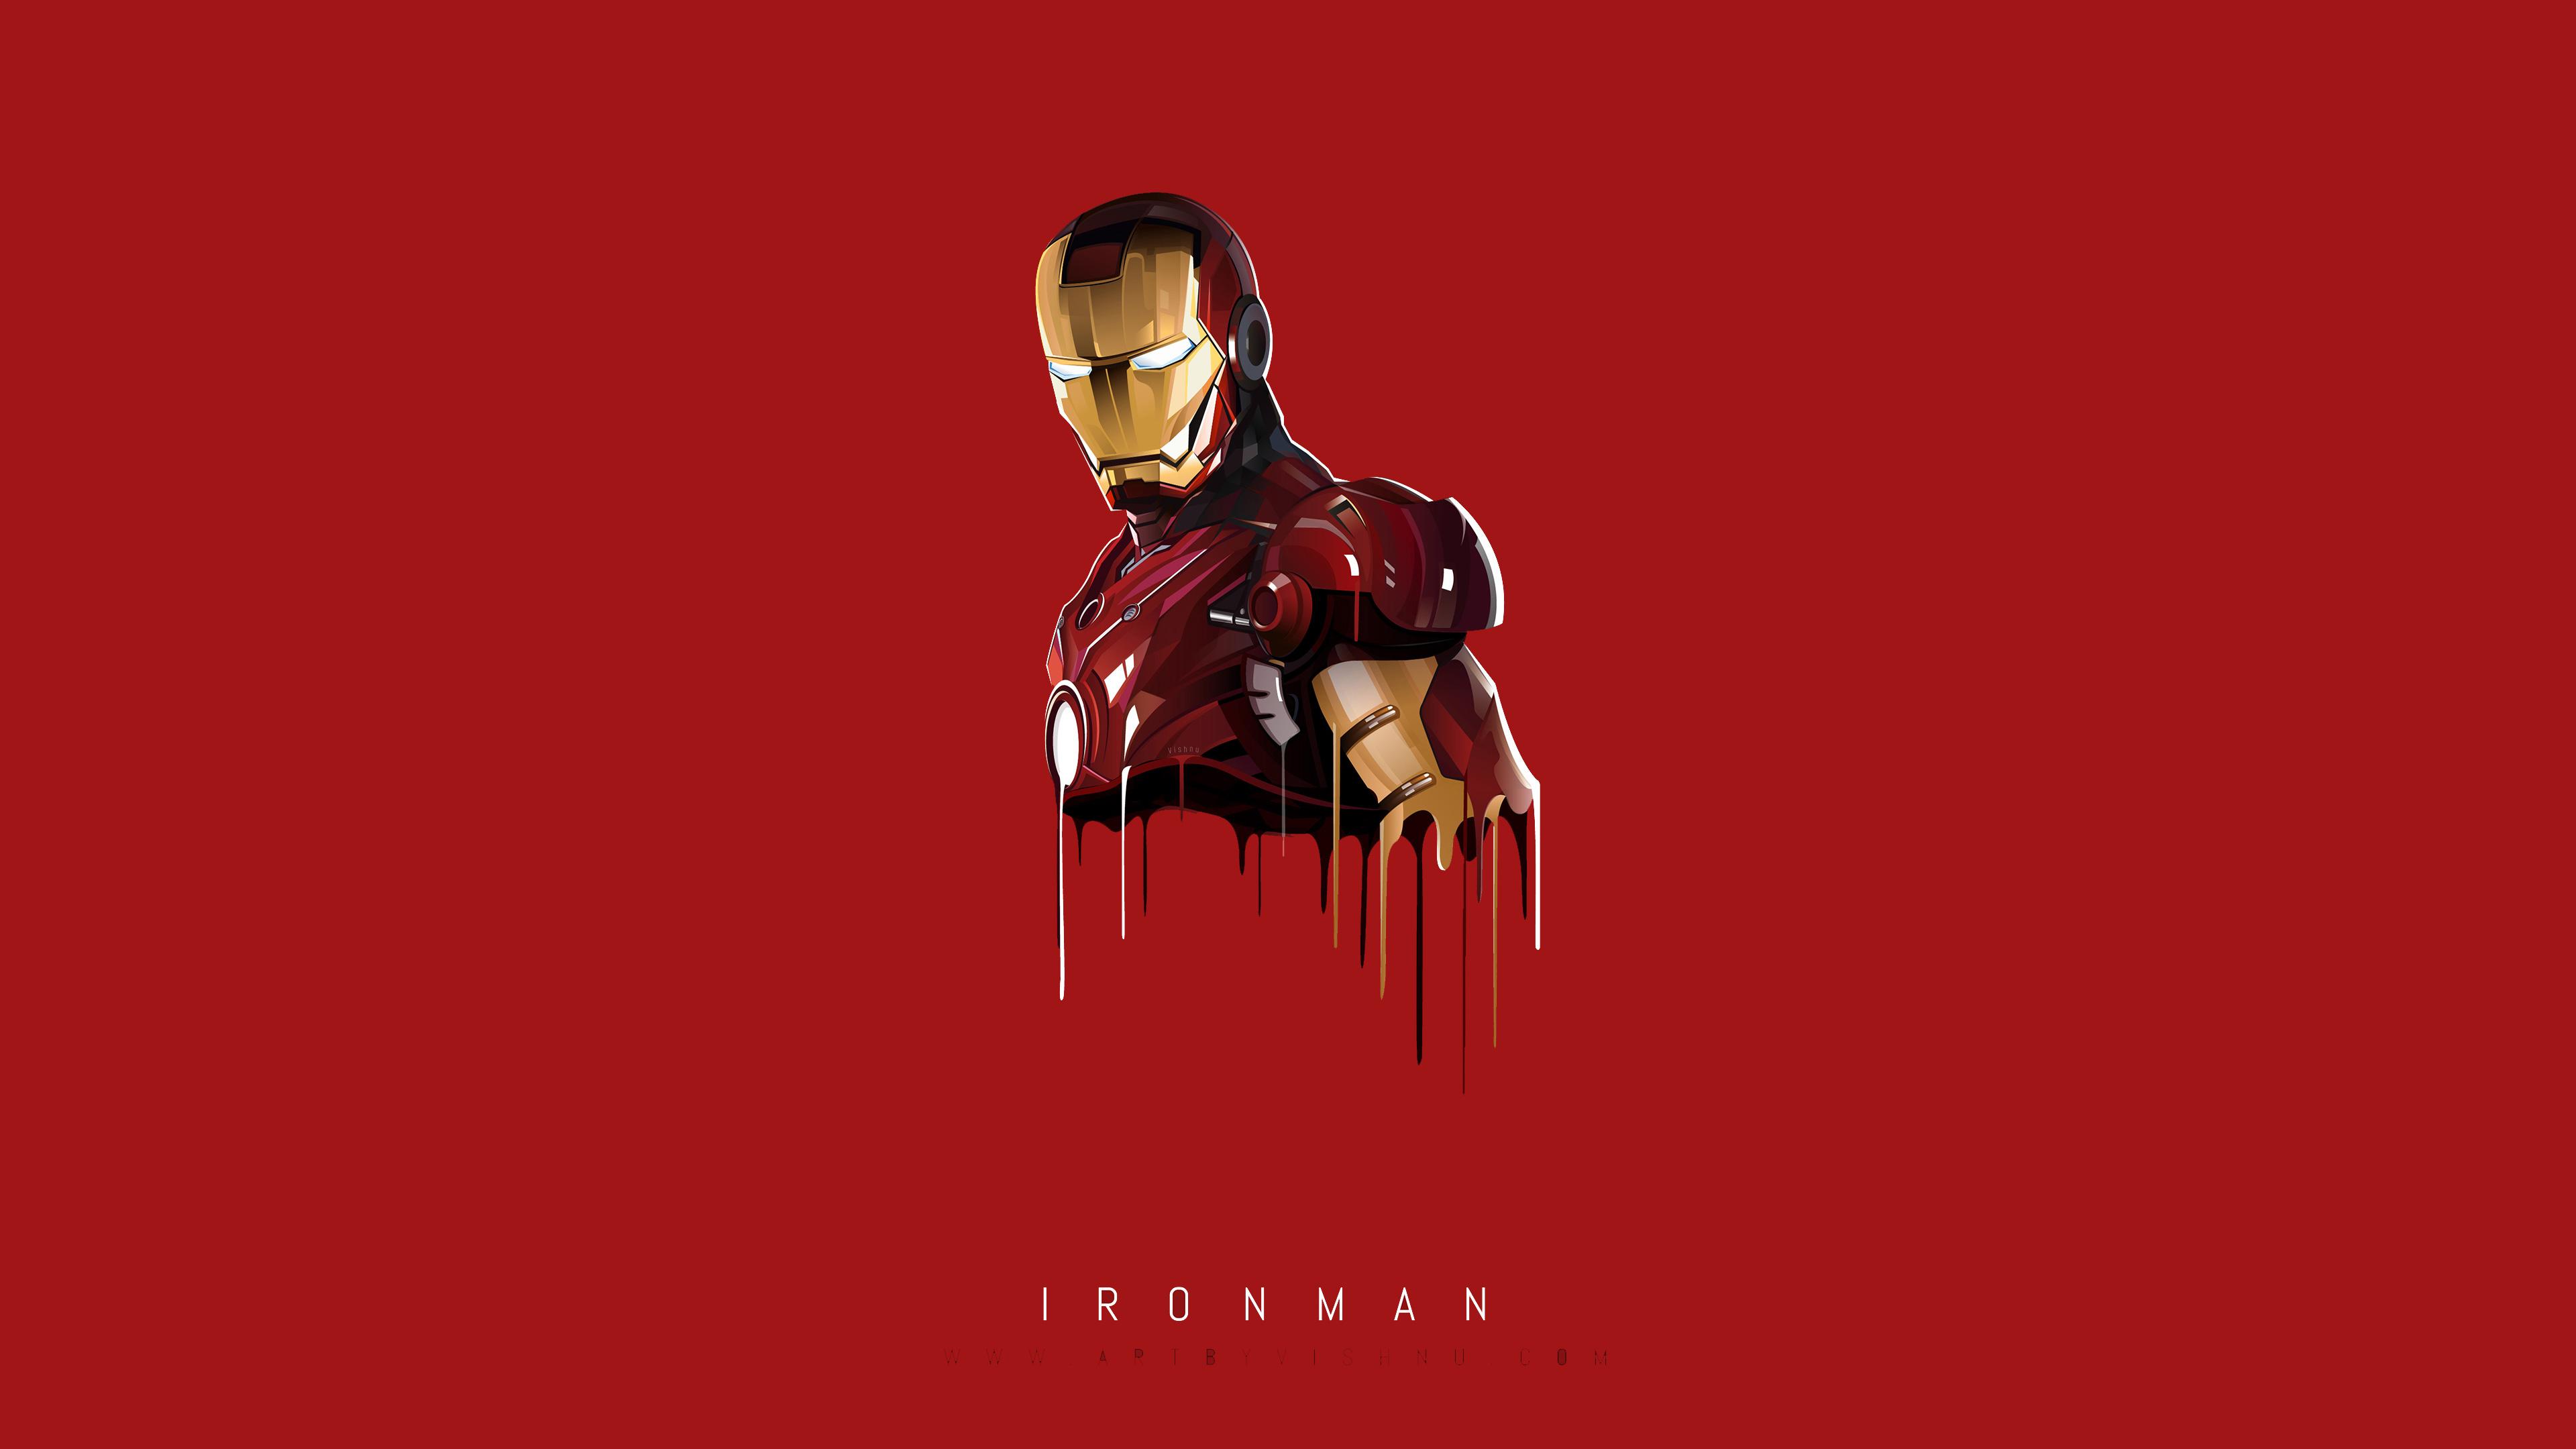 Iron Man Minimal, HD Superheroes, 4k Wallpaper, Image, Background